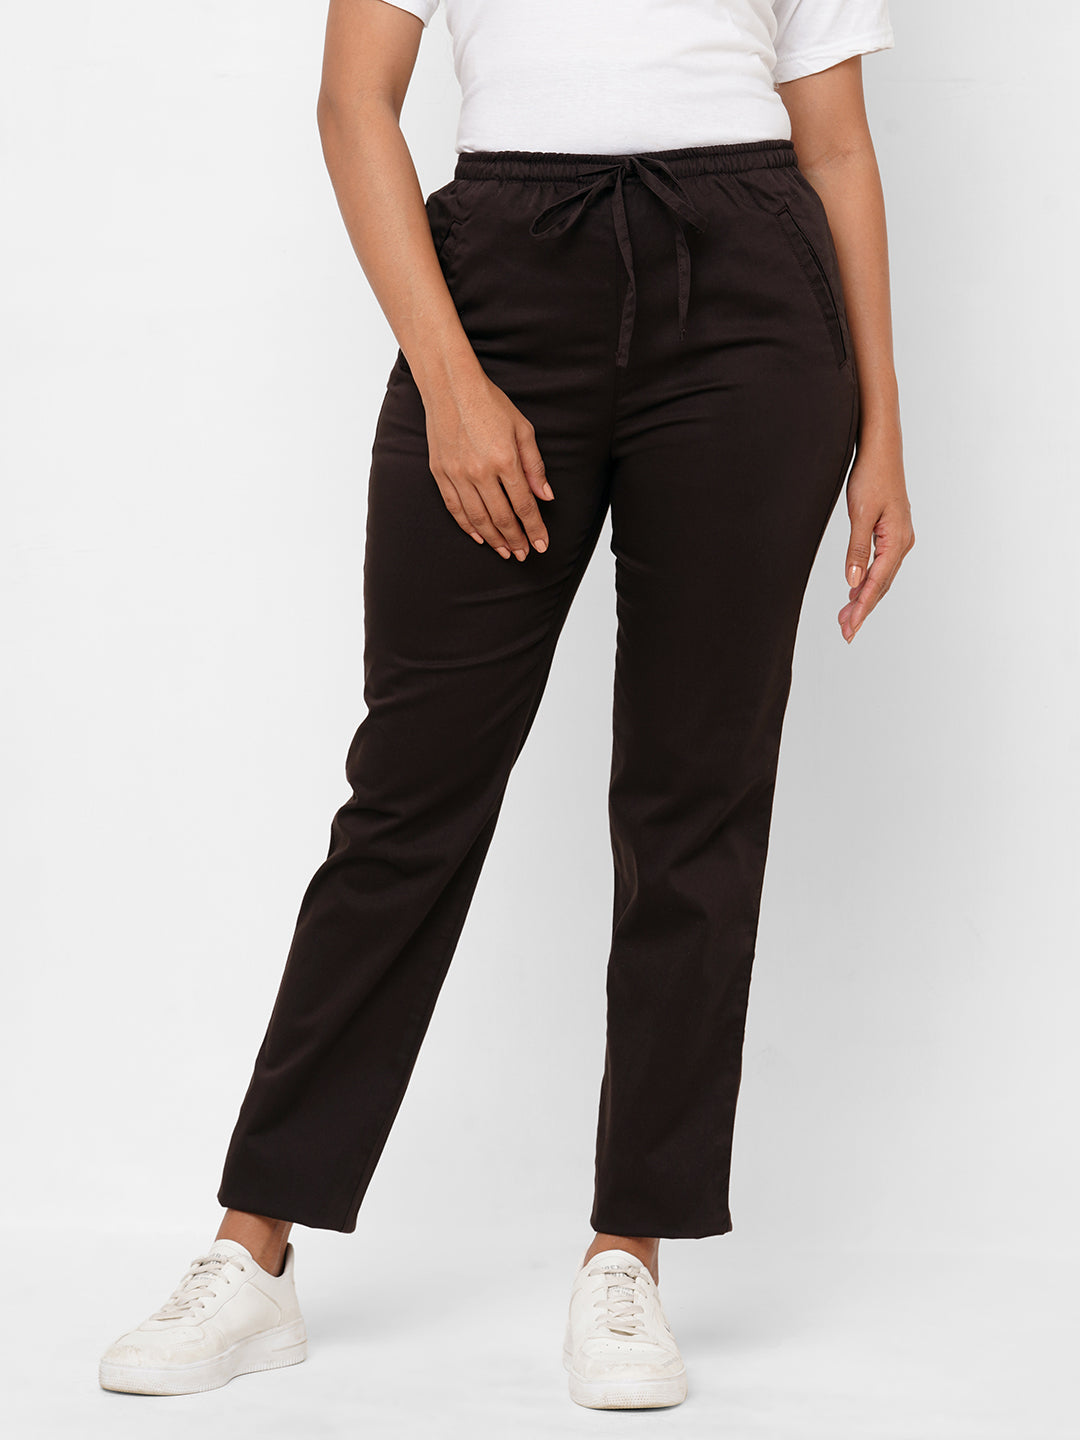 Women's Cotton Lycra Brown Regular Fit Pant